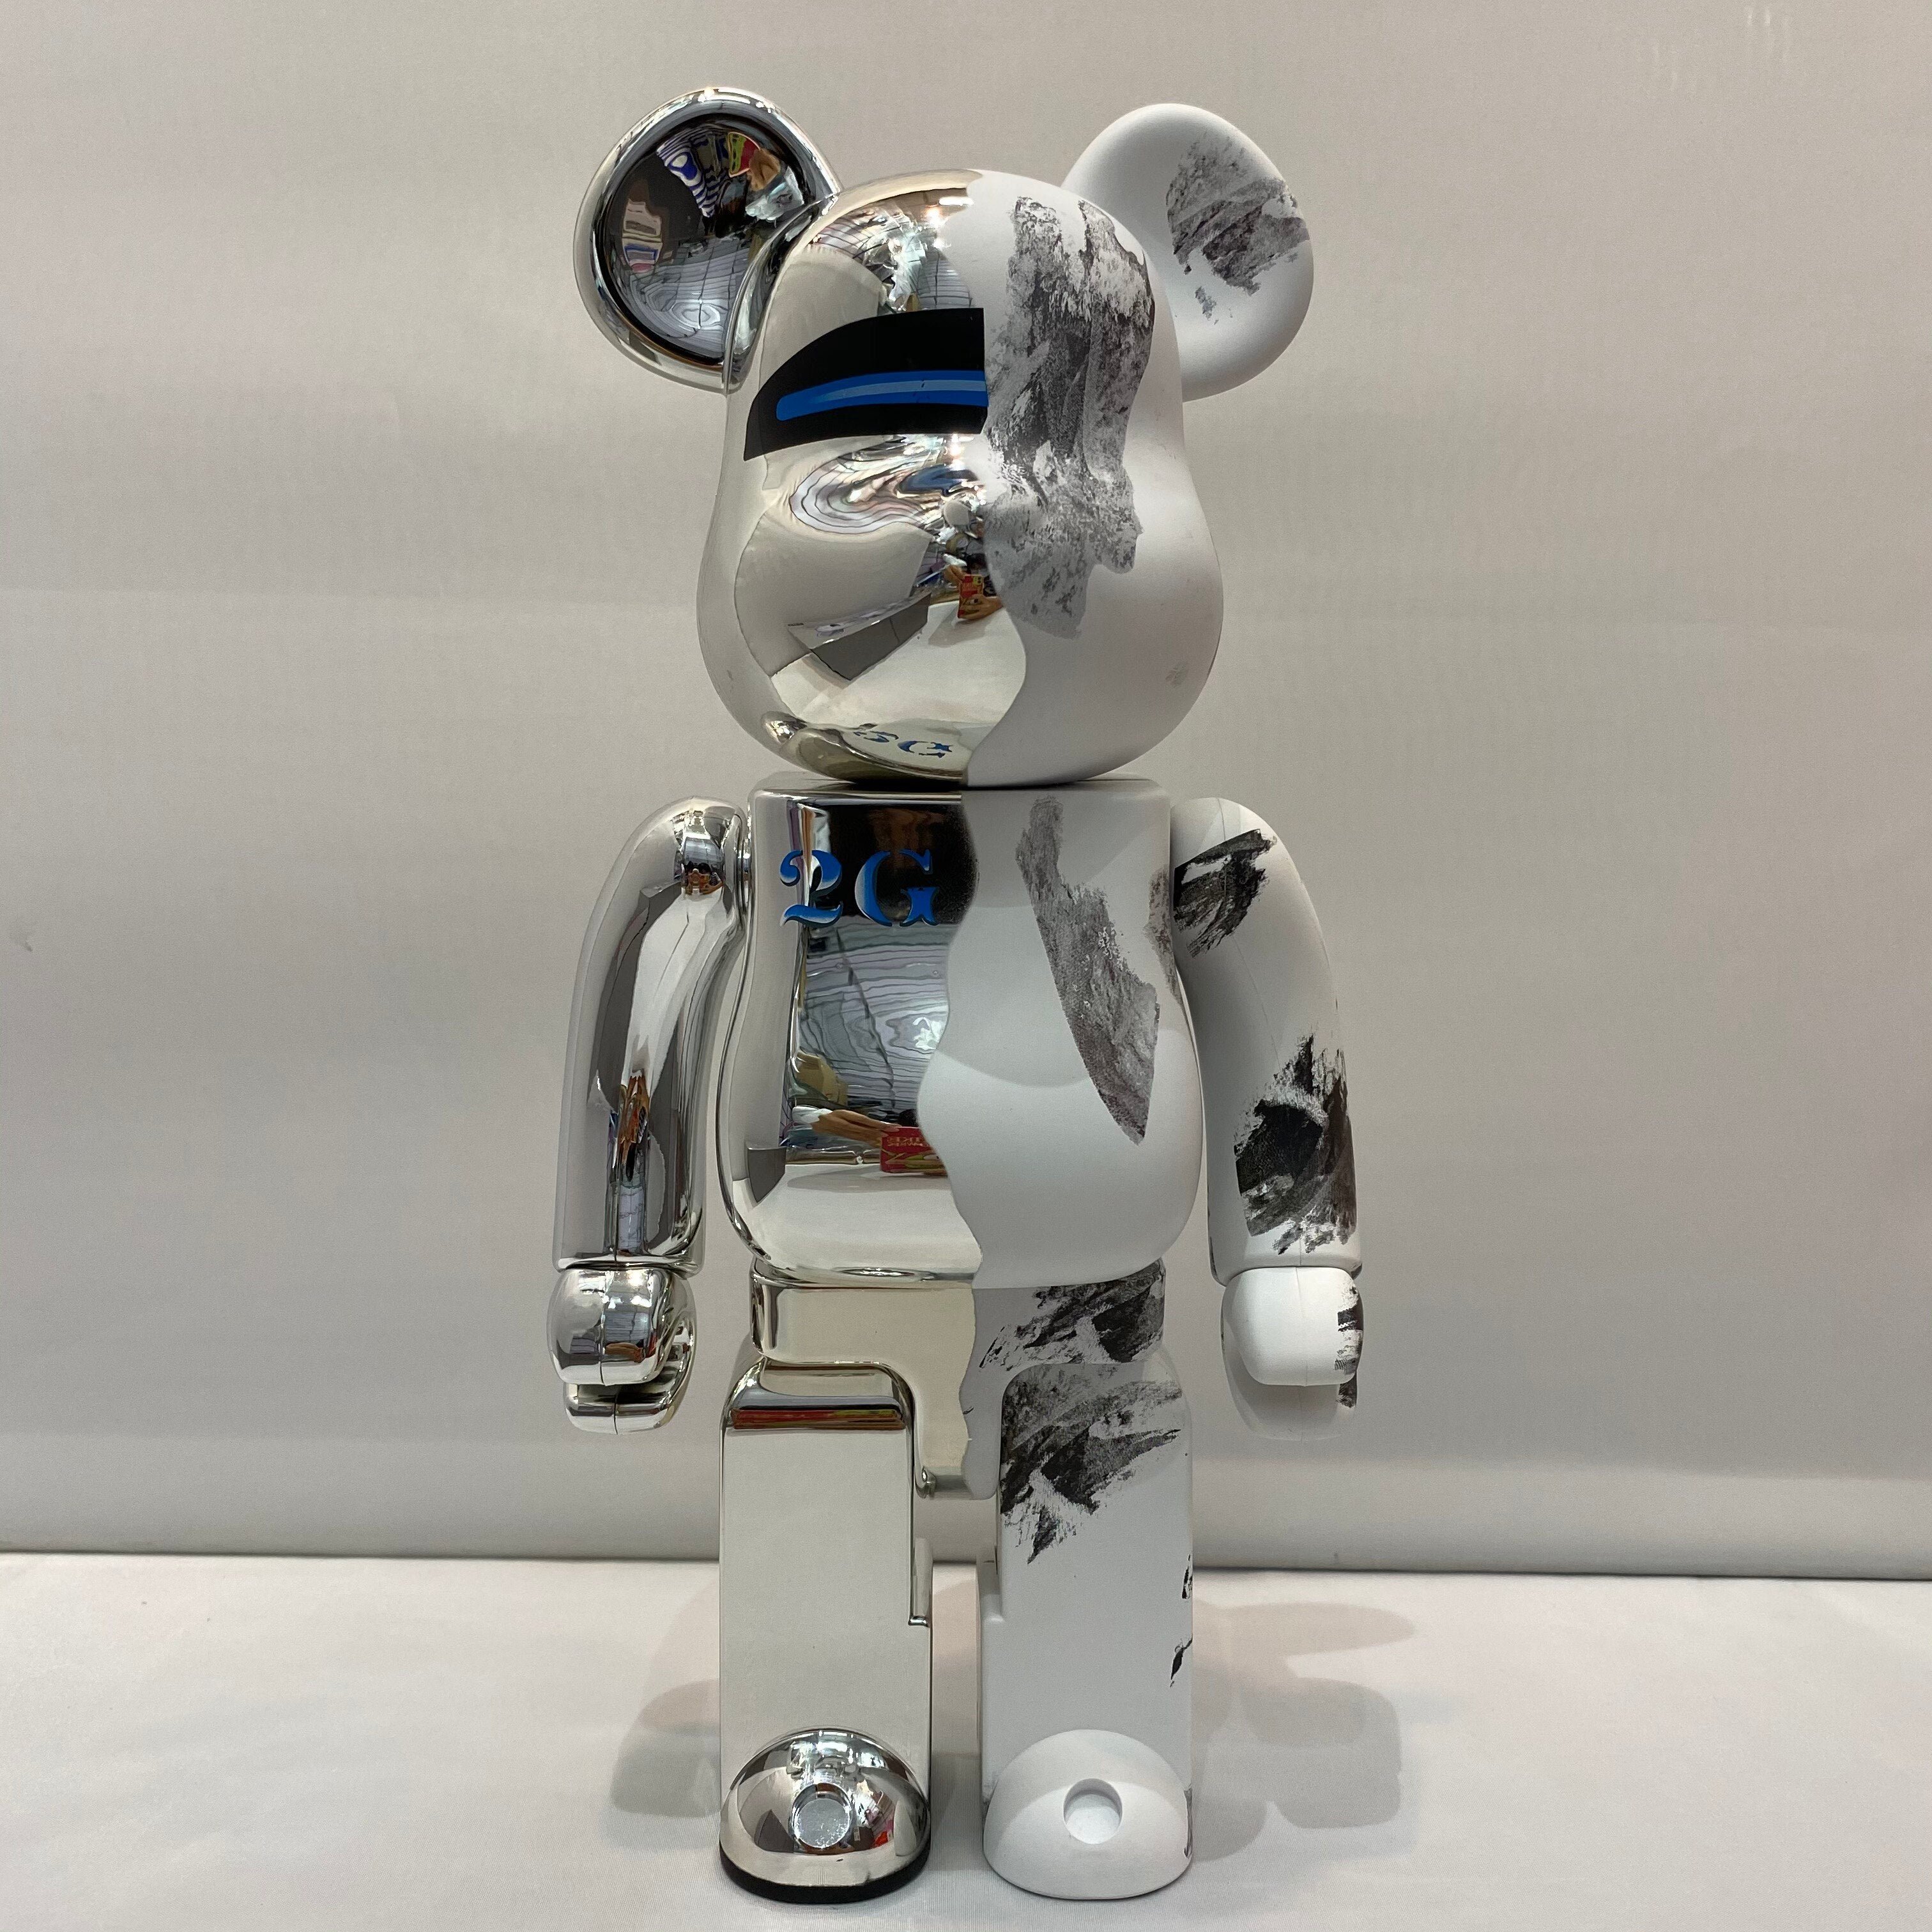 Bear brick Bear - Limited Edition Collectible Figurine